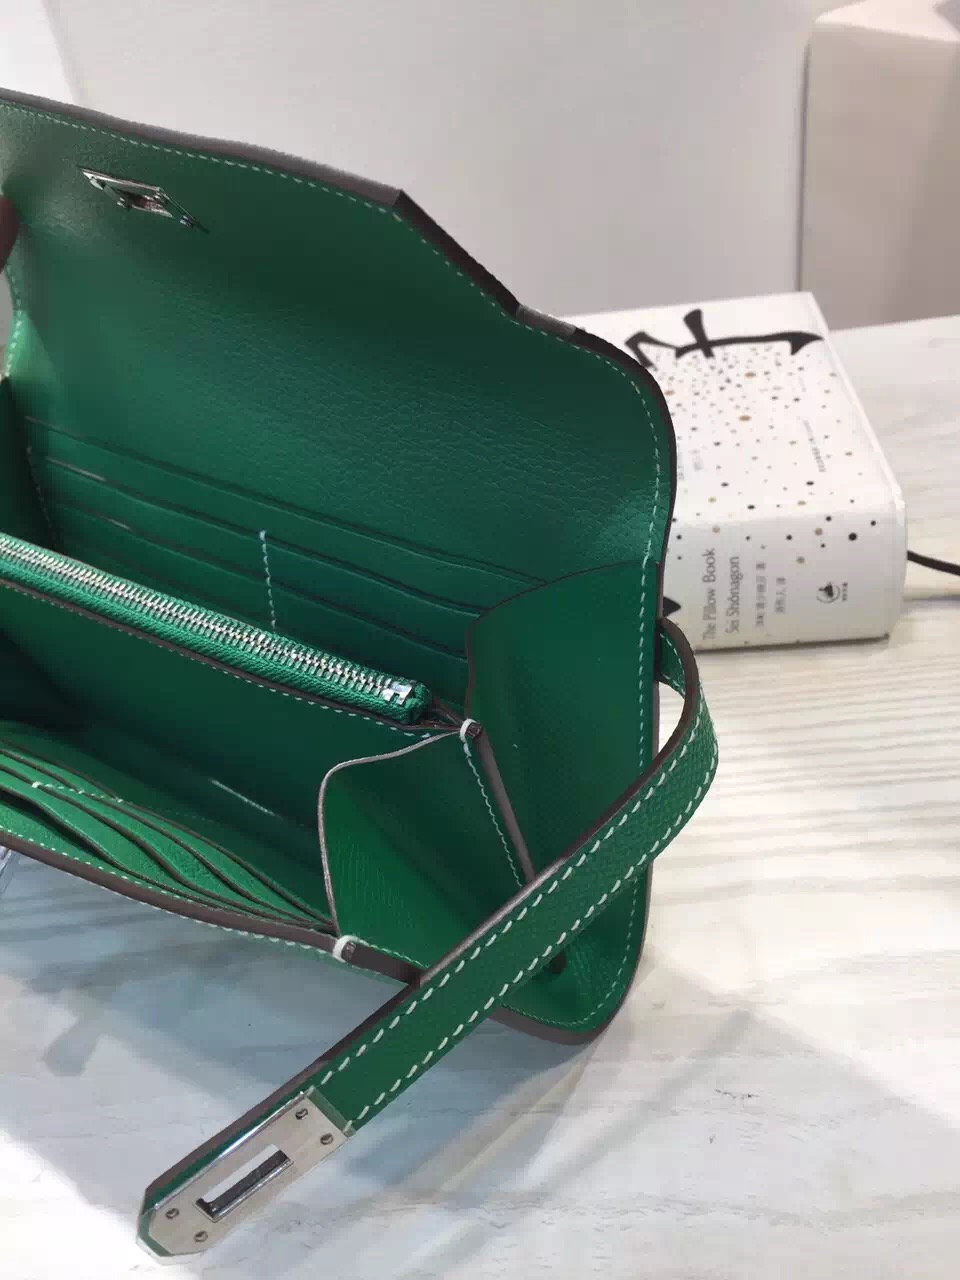 Discount Hermes Epsom Leather Bamboo Green Kelly Wallet Clutch Handbag